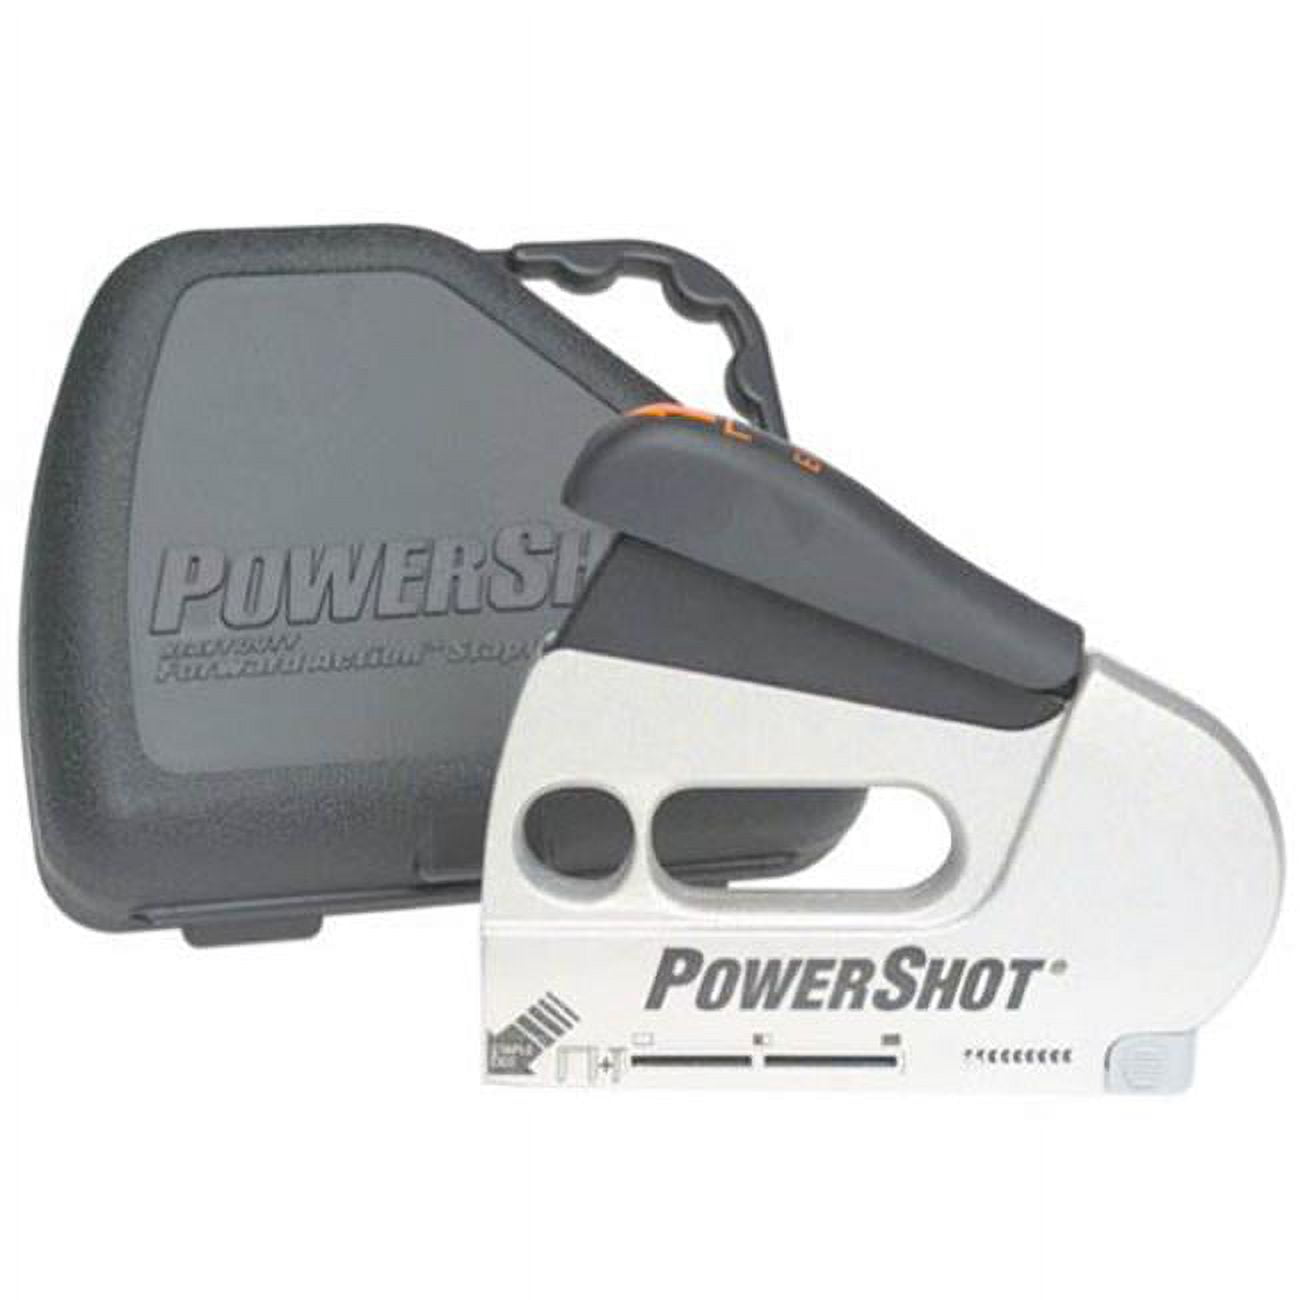 How to Load Arrow's PowerShot 5700 Staple Gun and Brad Nailer